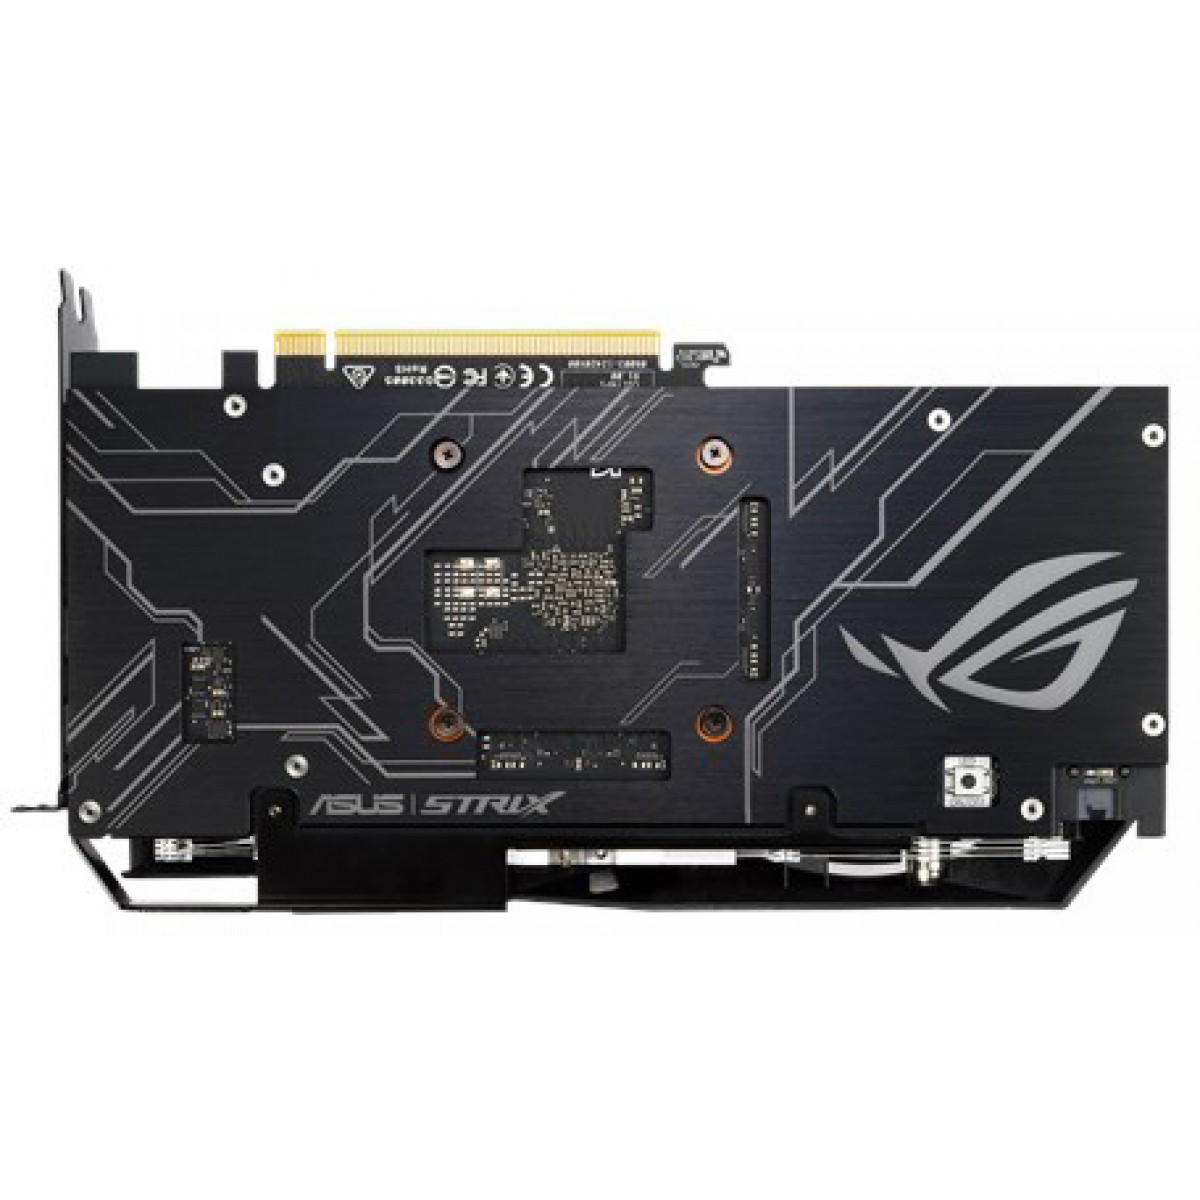 Placa de Vídeo Asus GeForce GTX 1650 Rog Strix Gaming, 4GB GDDR5, 128Bit, ROG-STRIX-GTX1650-4G-GAMING